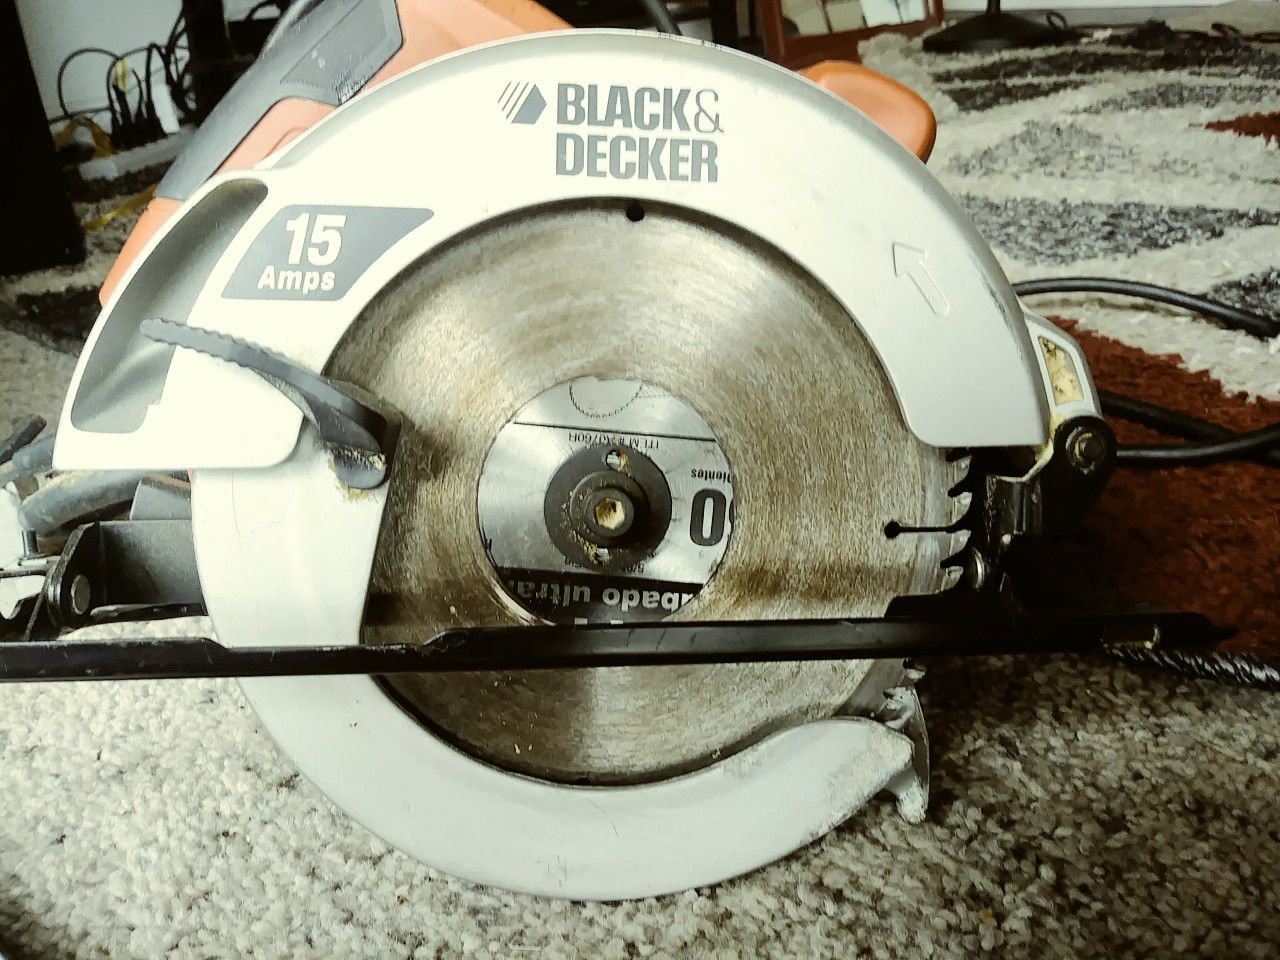 Black & Decker 15 amp circular saw